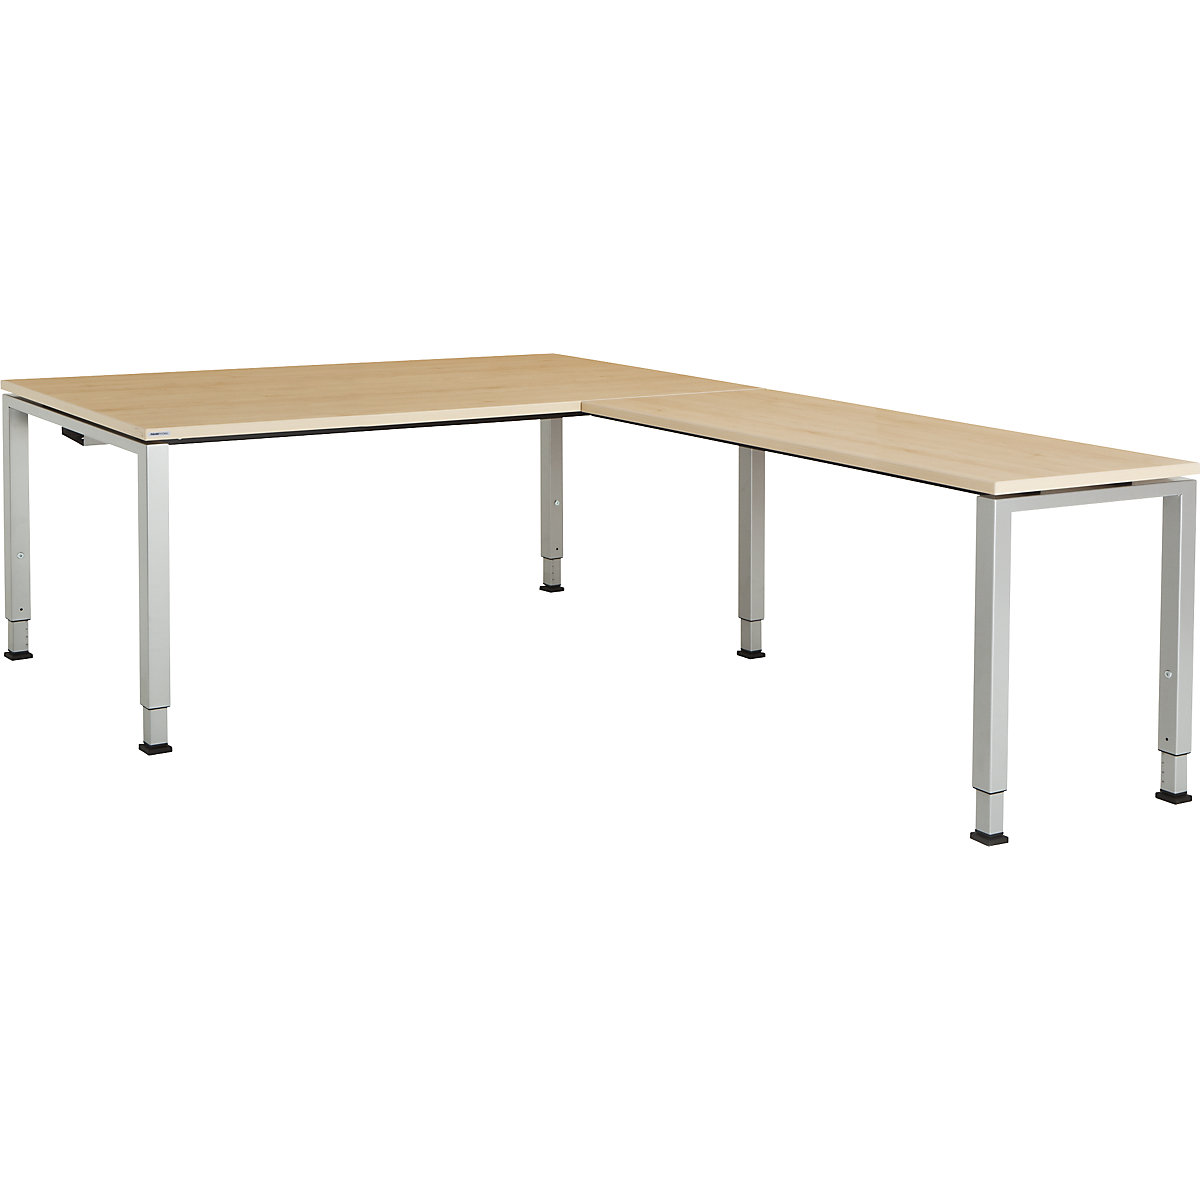 Pisaći stol, povezan, kvadratno/pravokutno podnožje - mauser